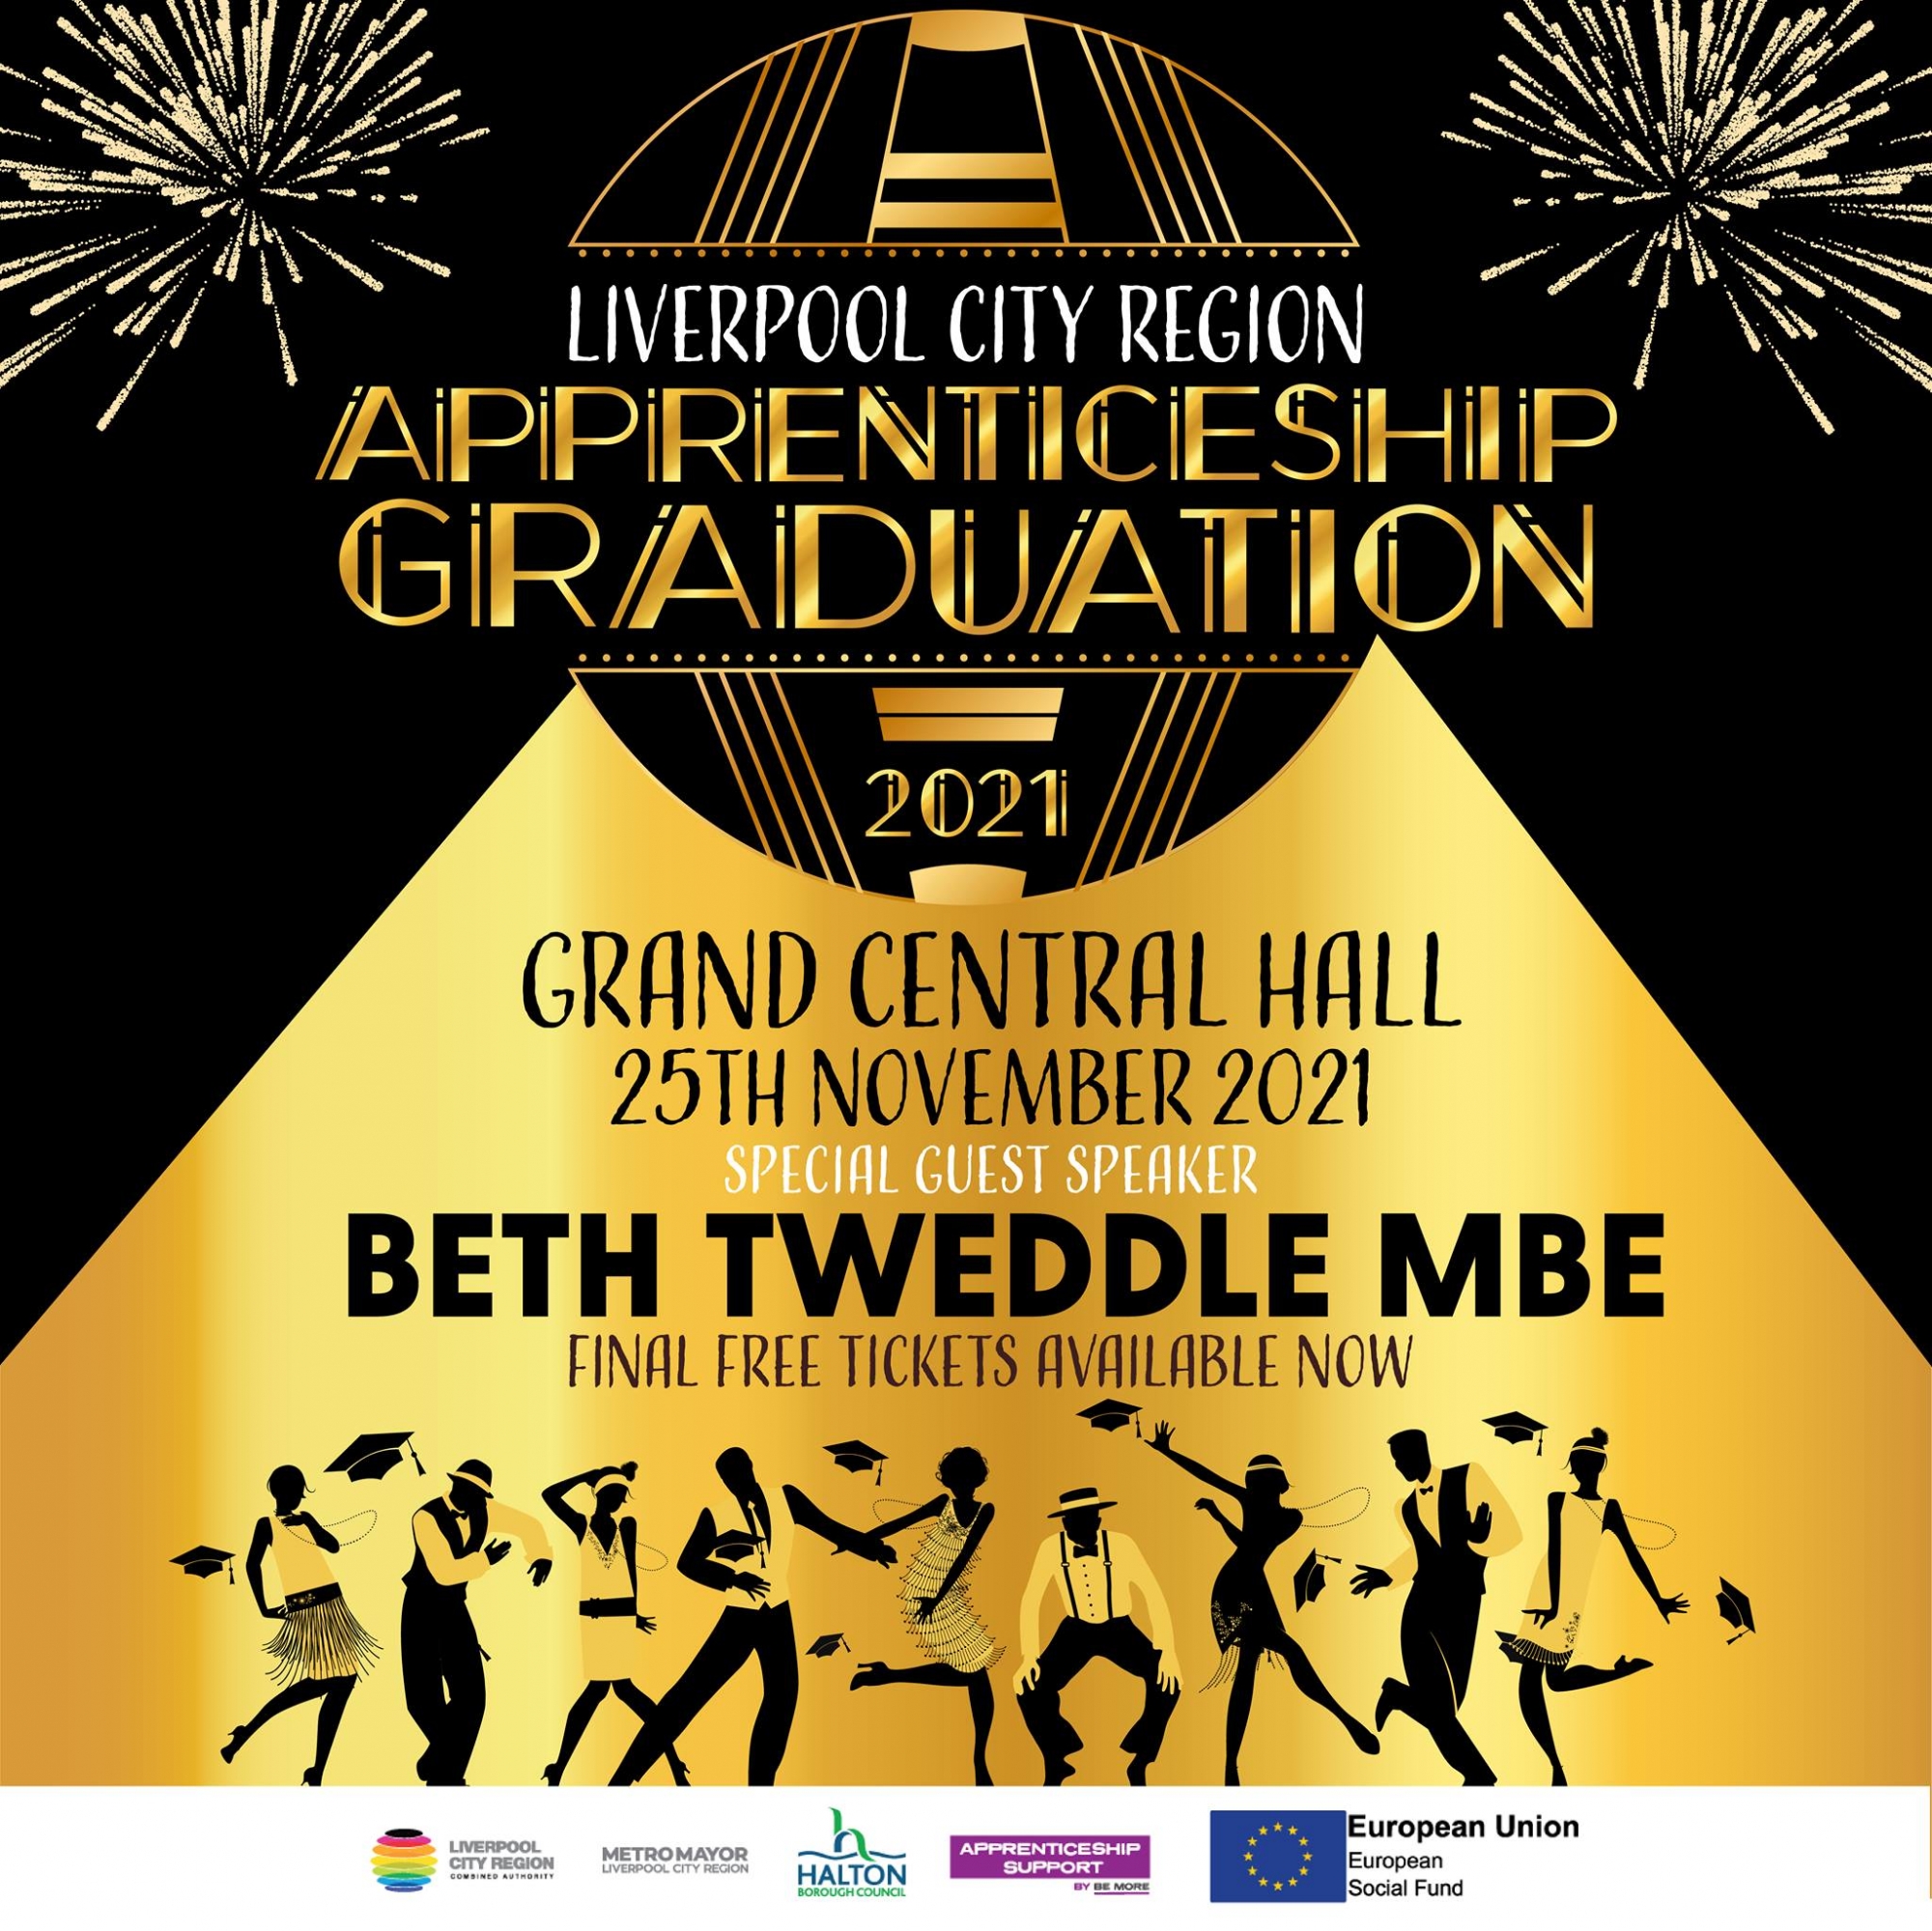 Beth Tweddle MBE Revealed as Guest Speaker for Liverpool City Region Apprenticeship Graduation 2021